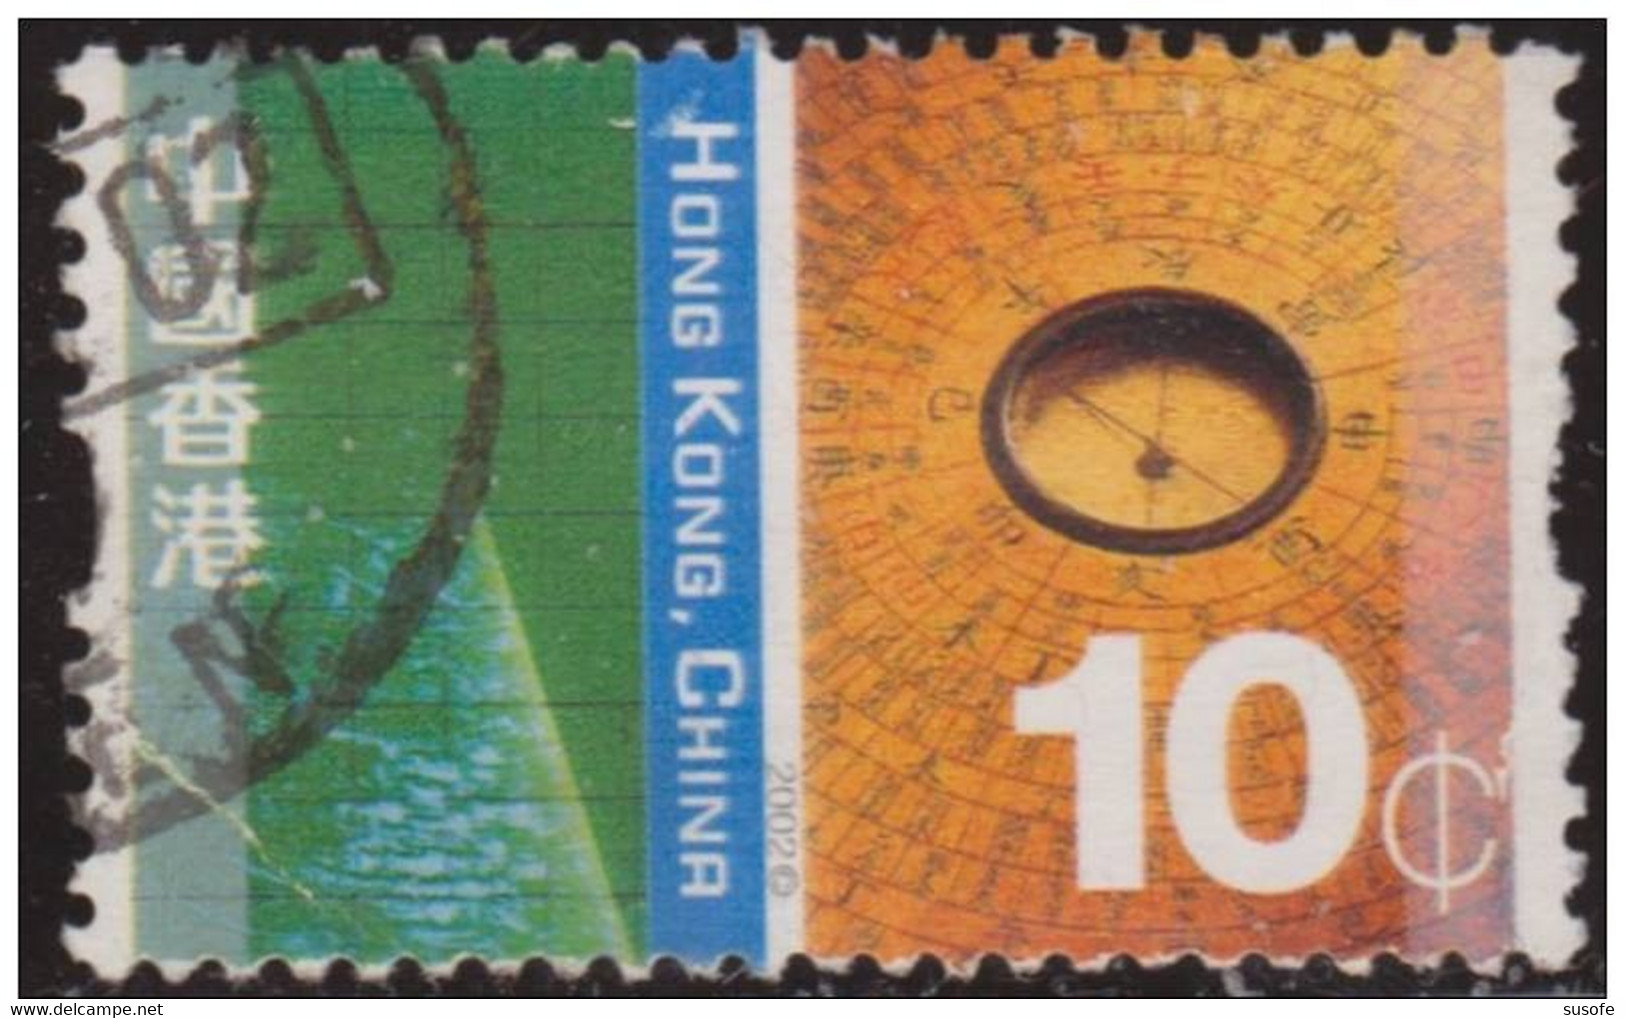 Hong Kong China 2002 Scott 998 Sello º Cultural Diversity Navegacion Michel 1055 Yvert 1027 Stamps Timbre Briefmarke - Gebruikt